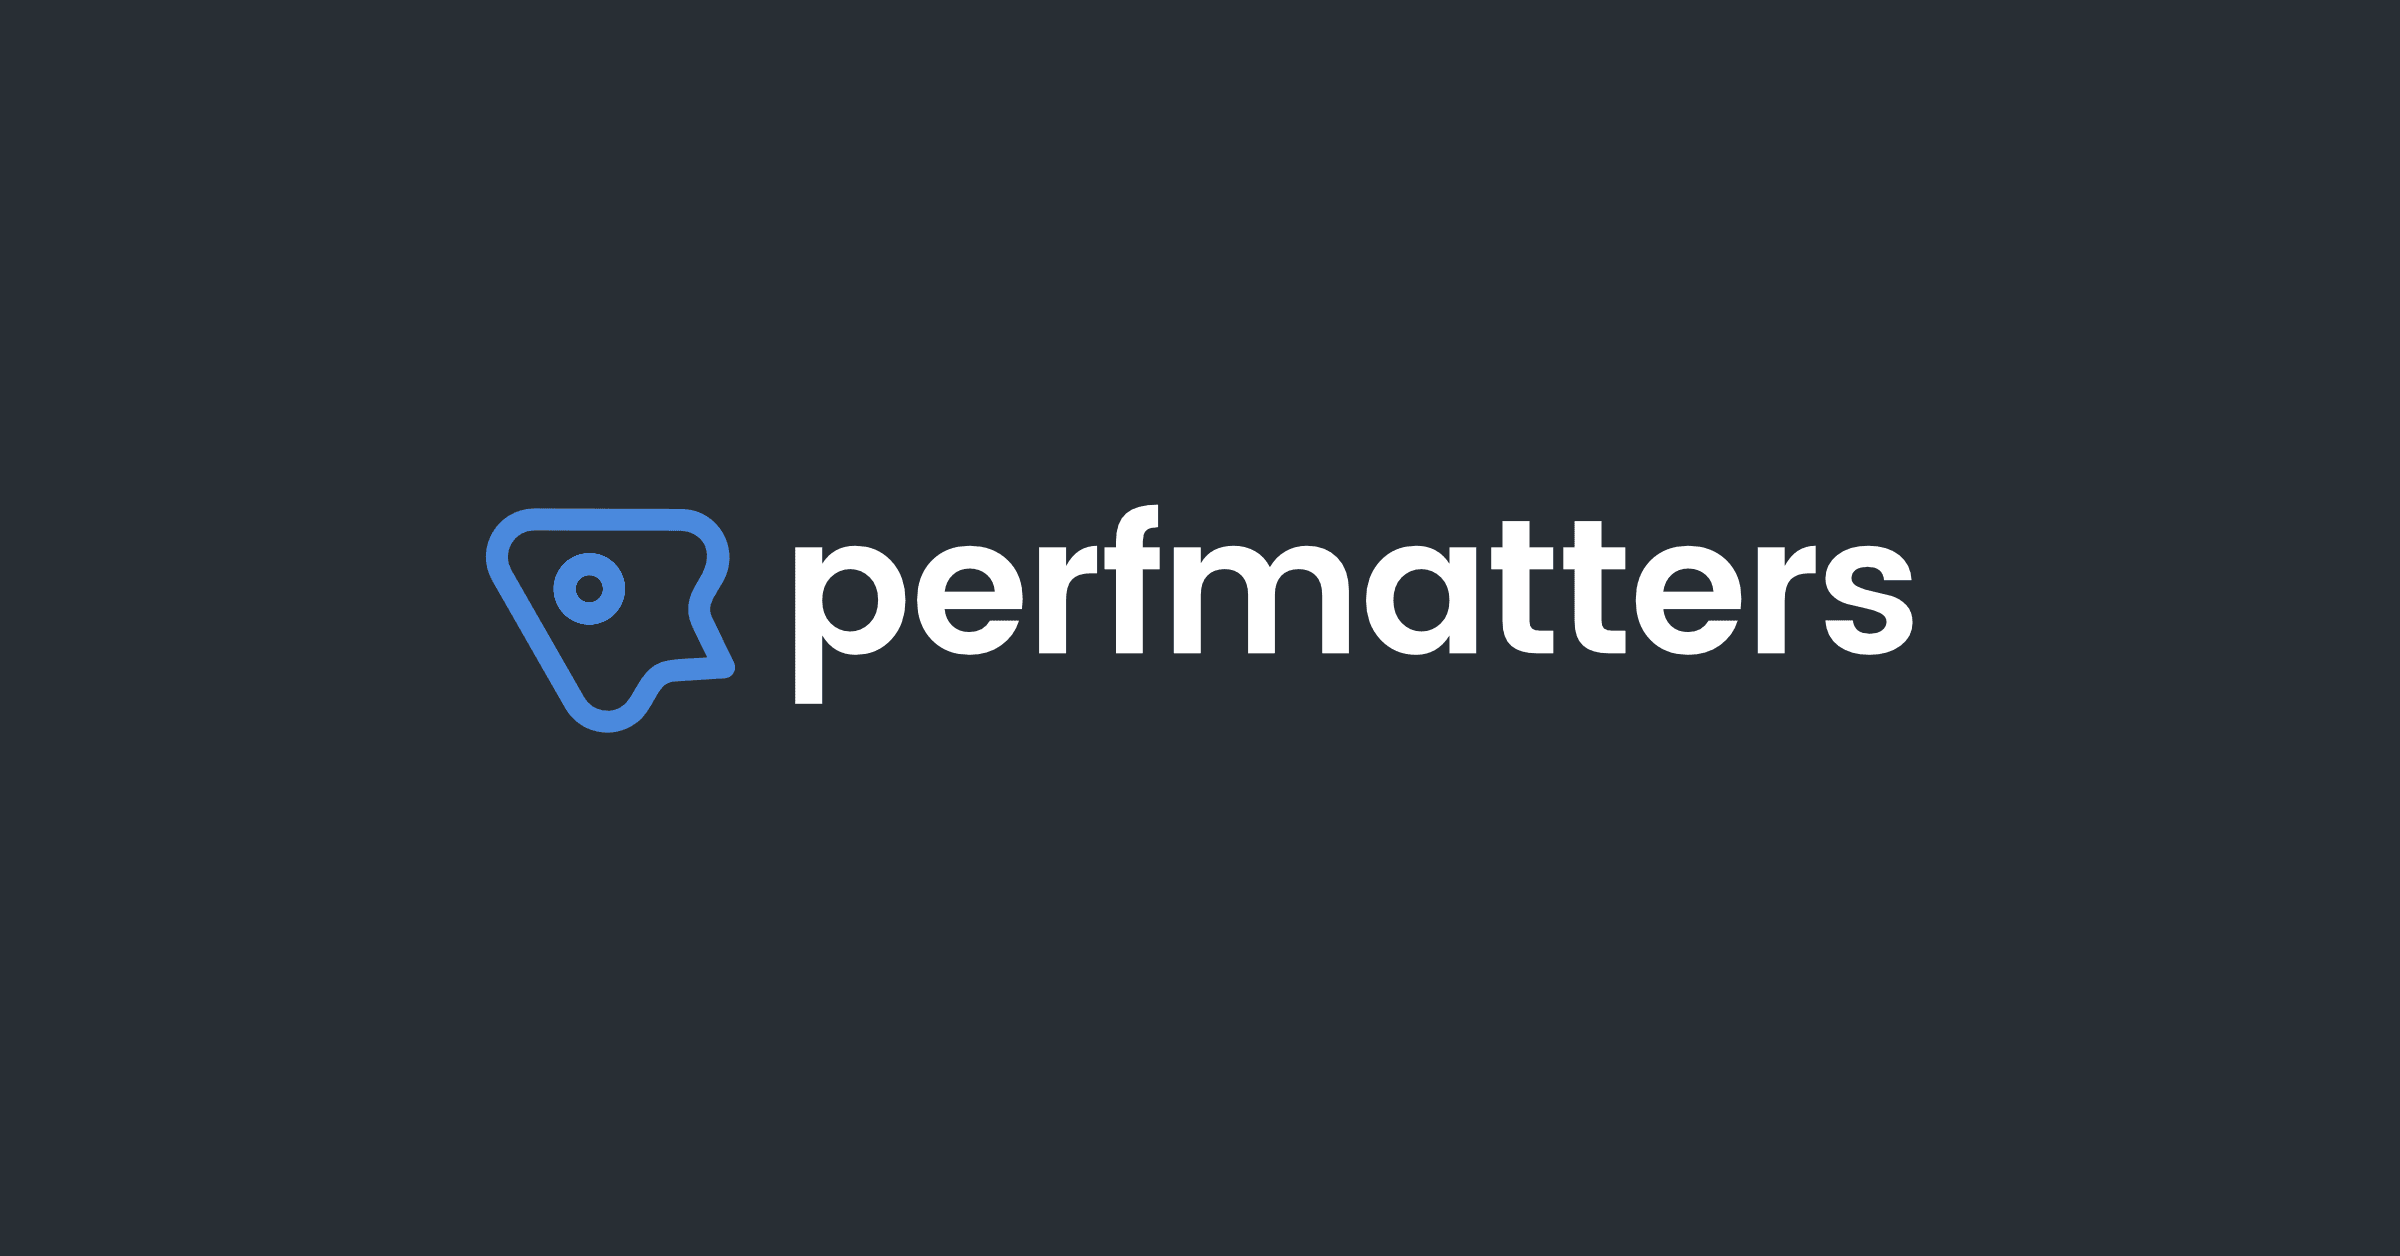 perfmatters- افزونه افزایش سرعت 